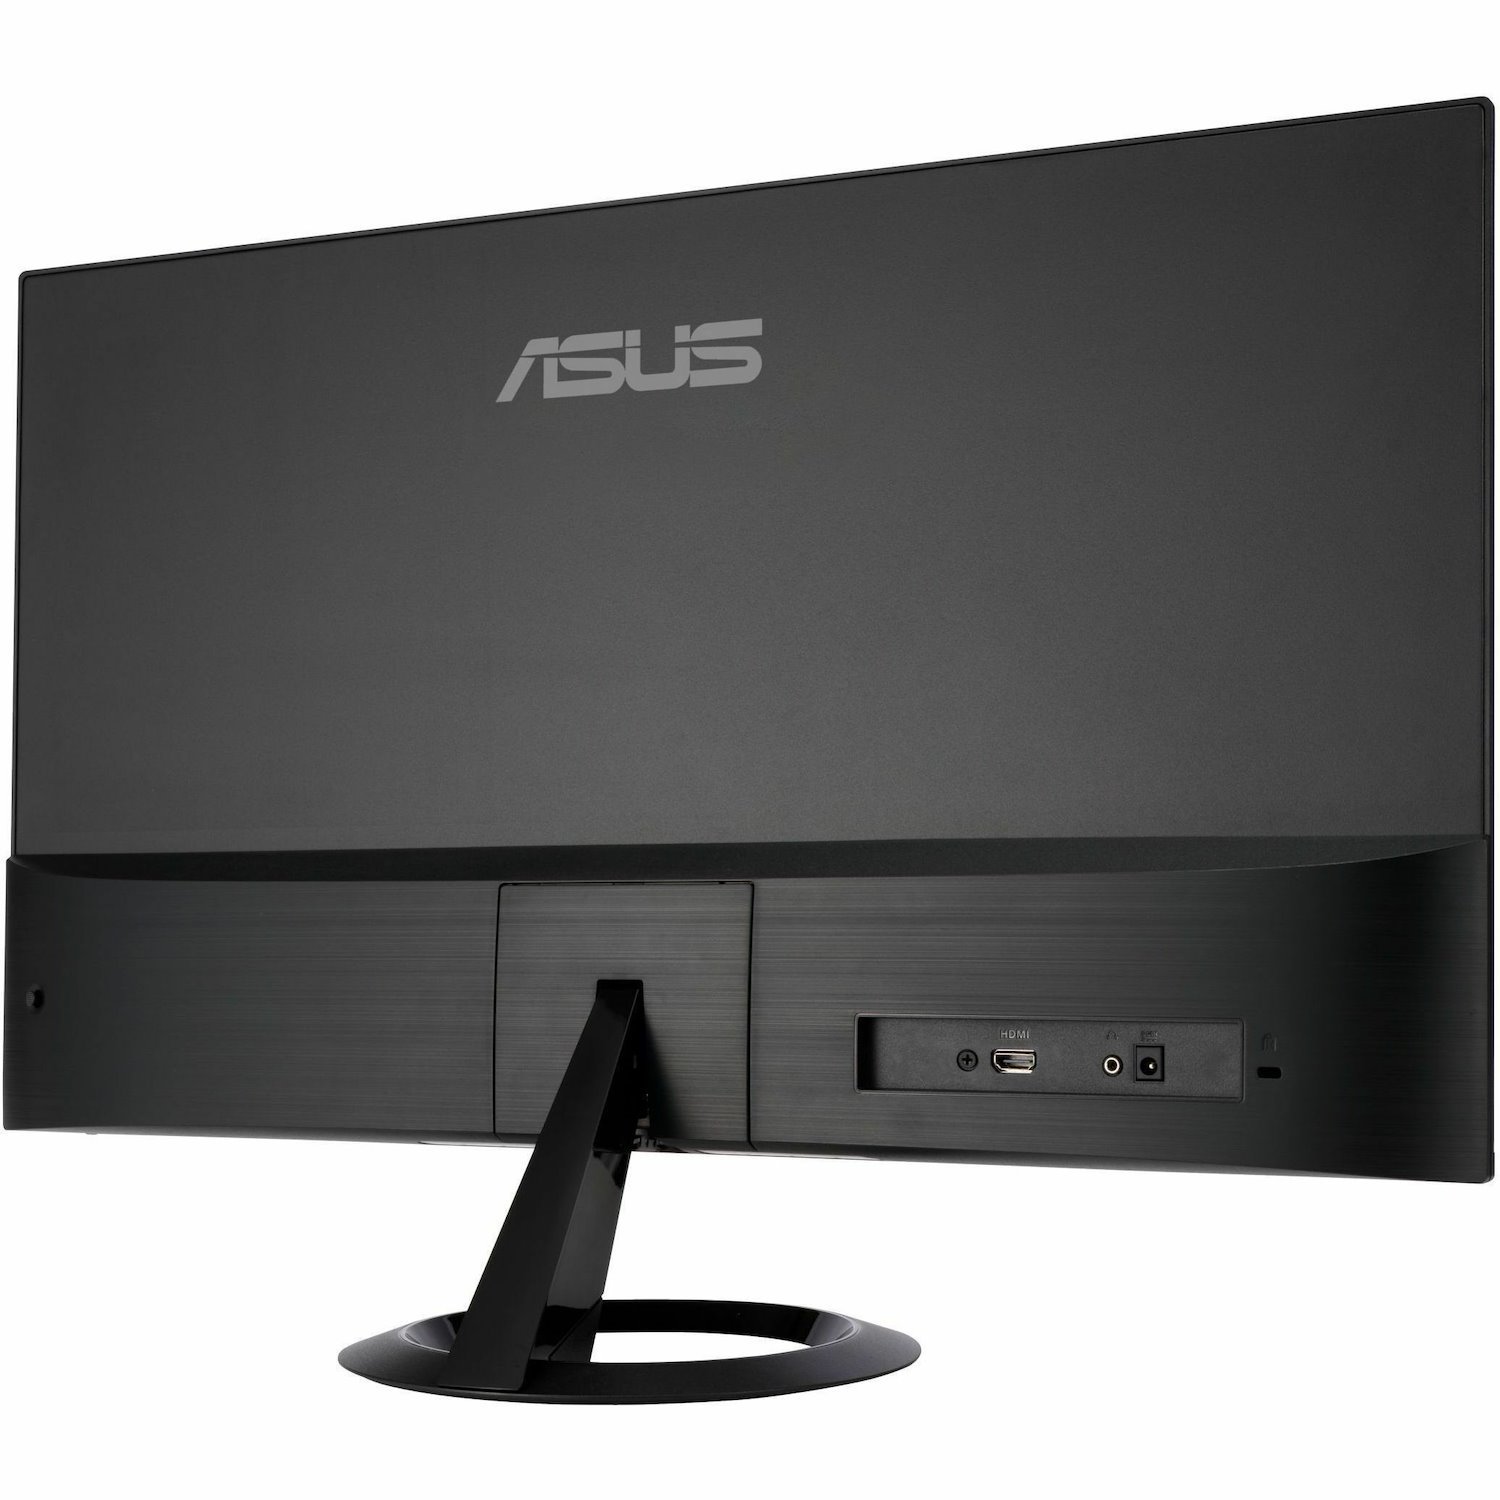 Asus VZ24EHF 24" Class Full HD Gaming LED Monitor - 16:9